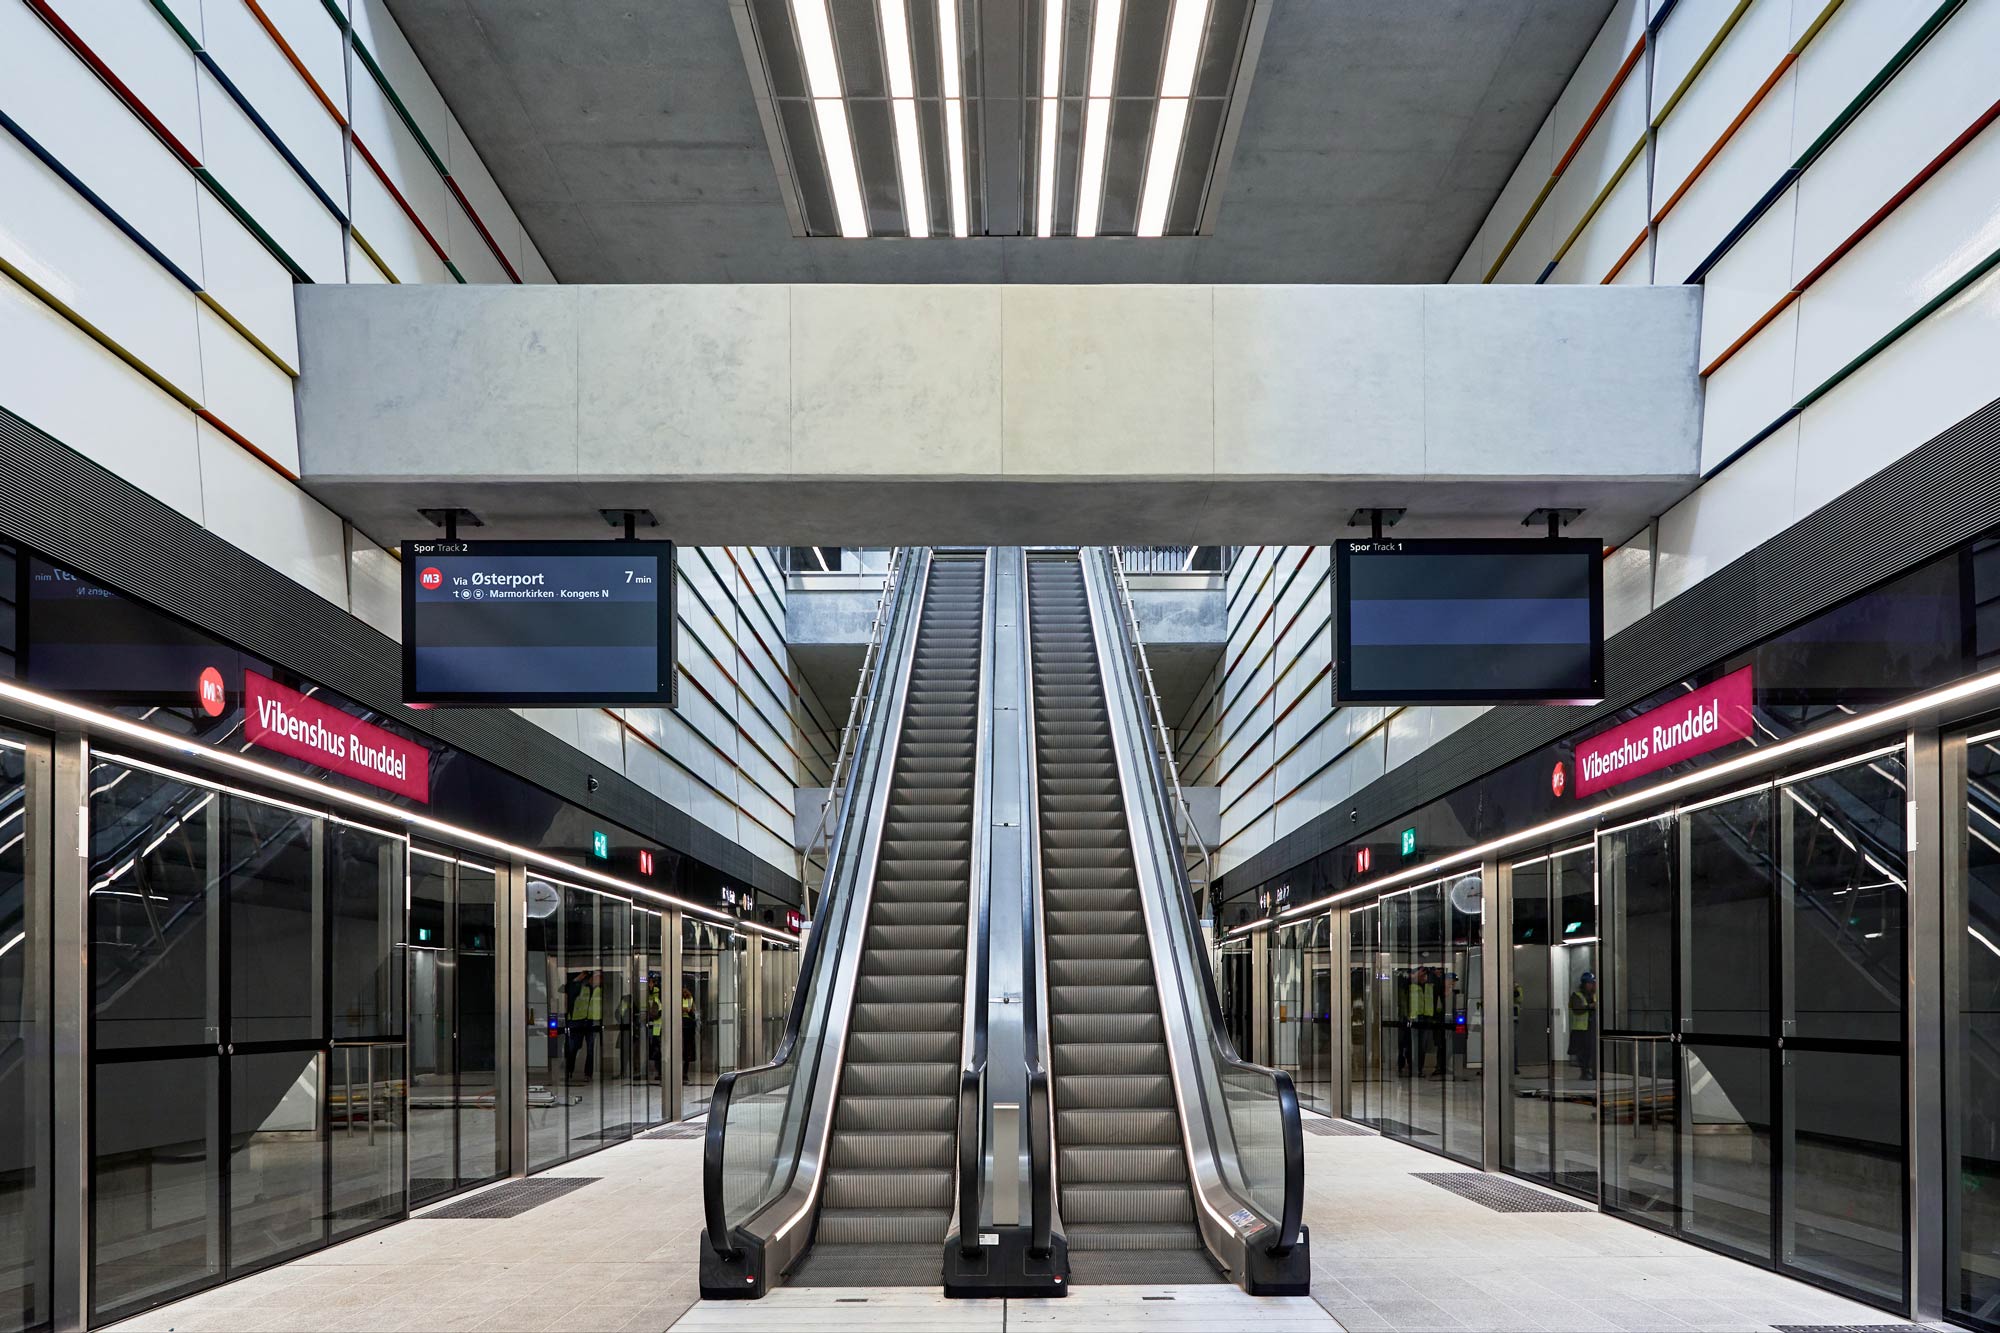 Stairs at Vibenhus metro station